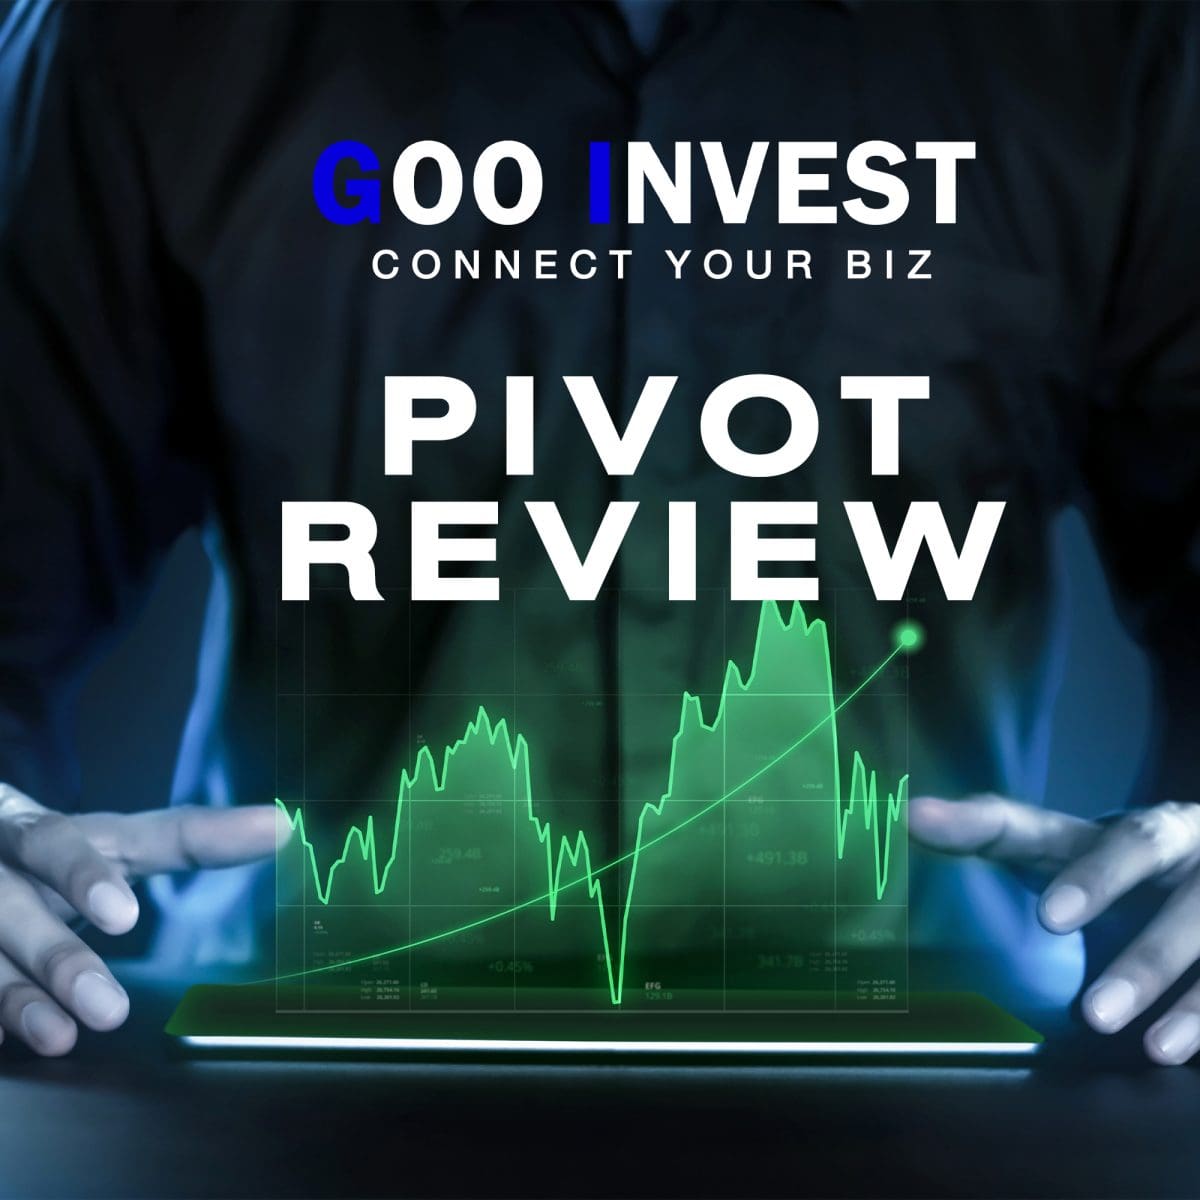 Pivot point Goo Invest Trade